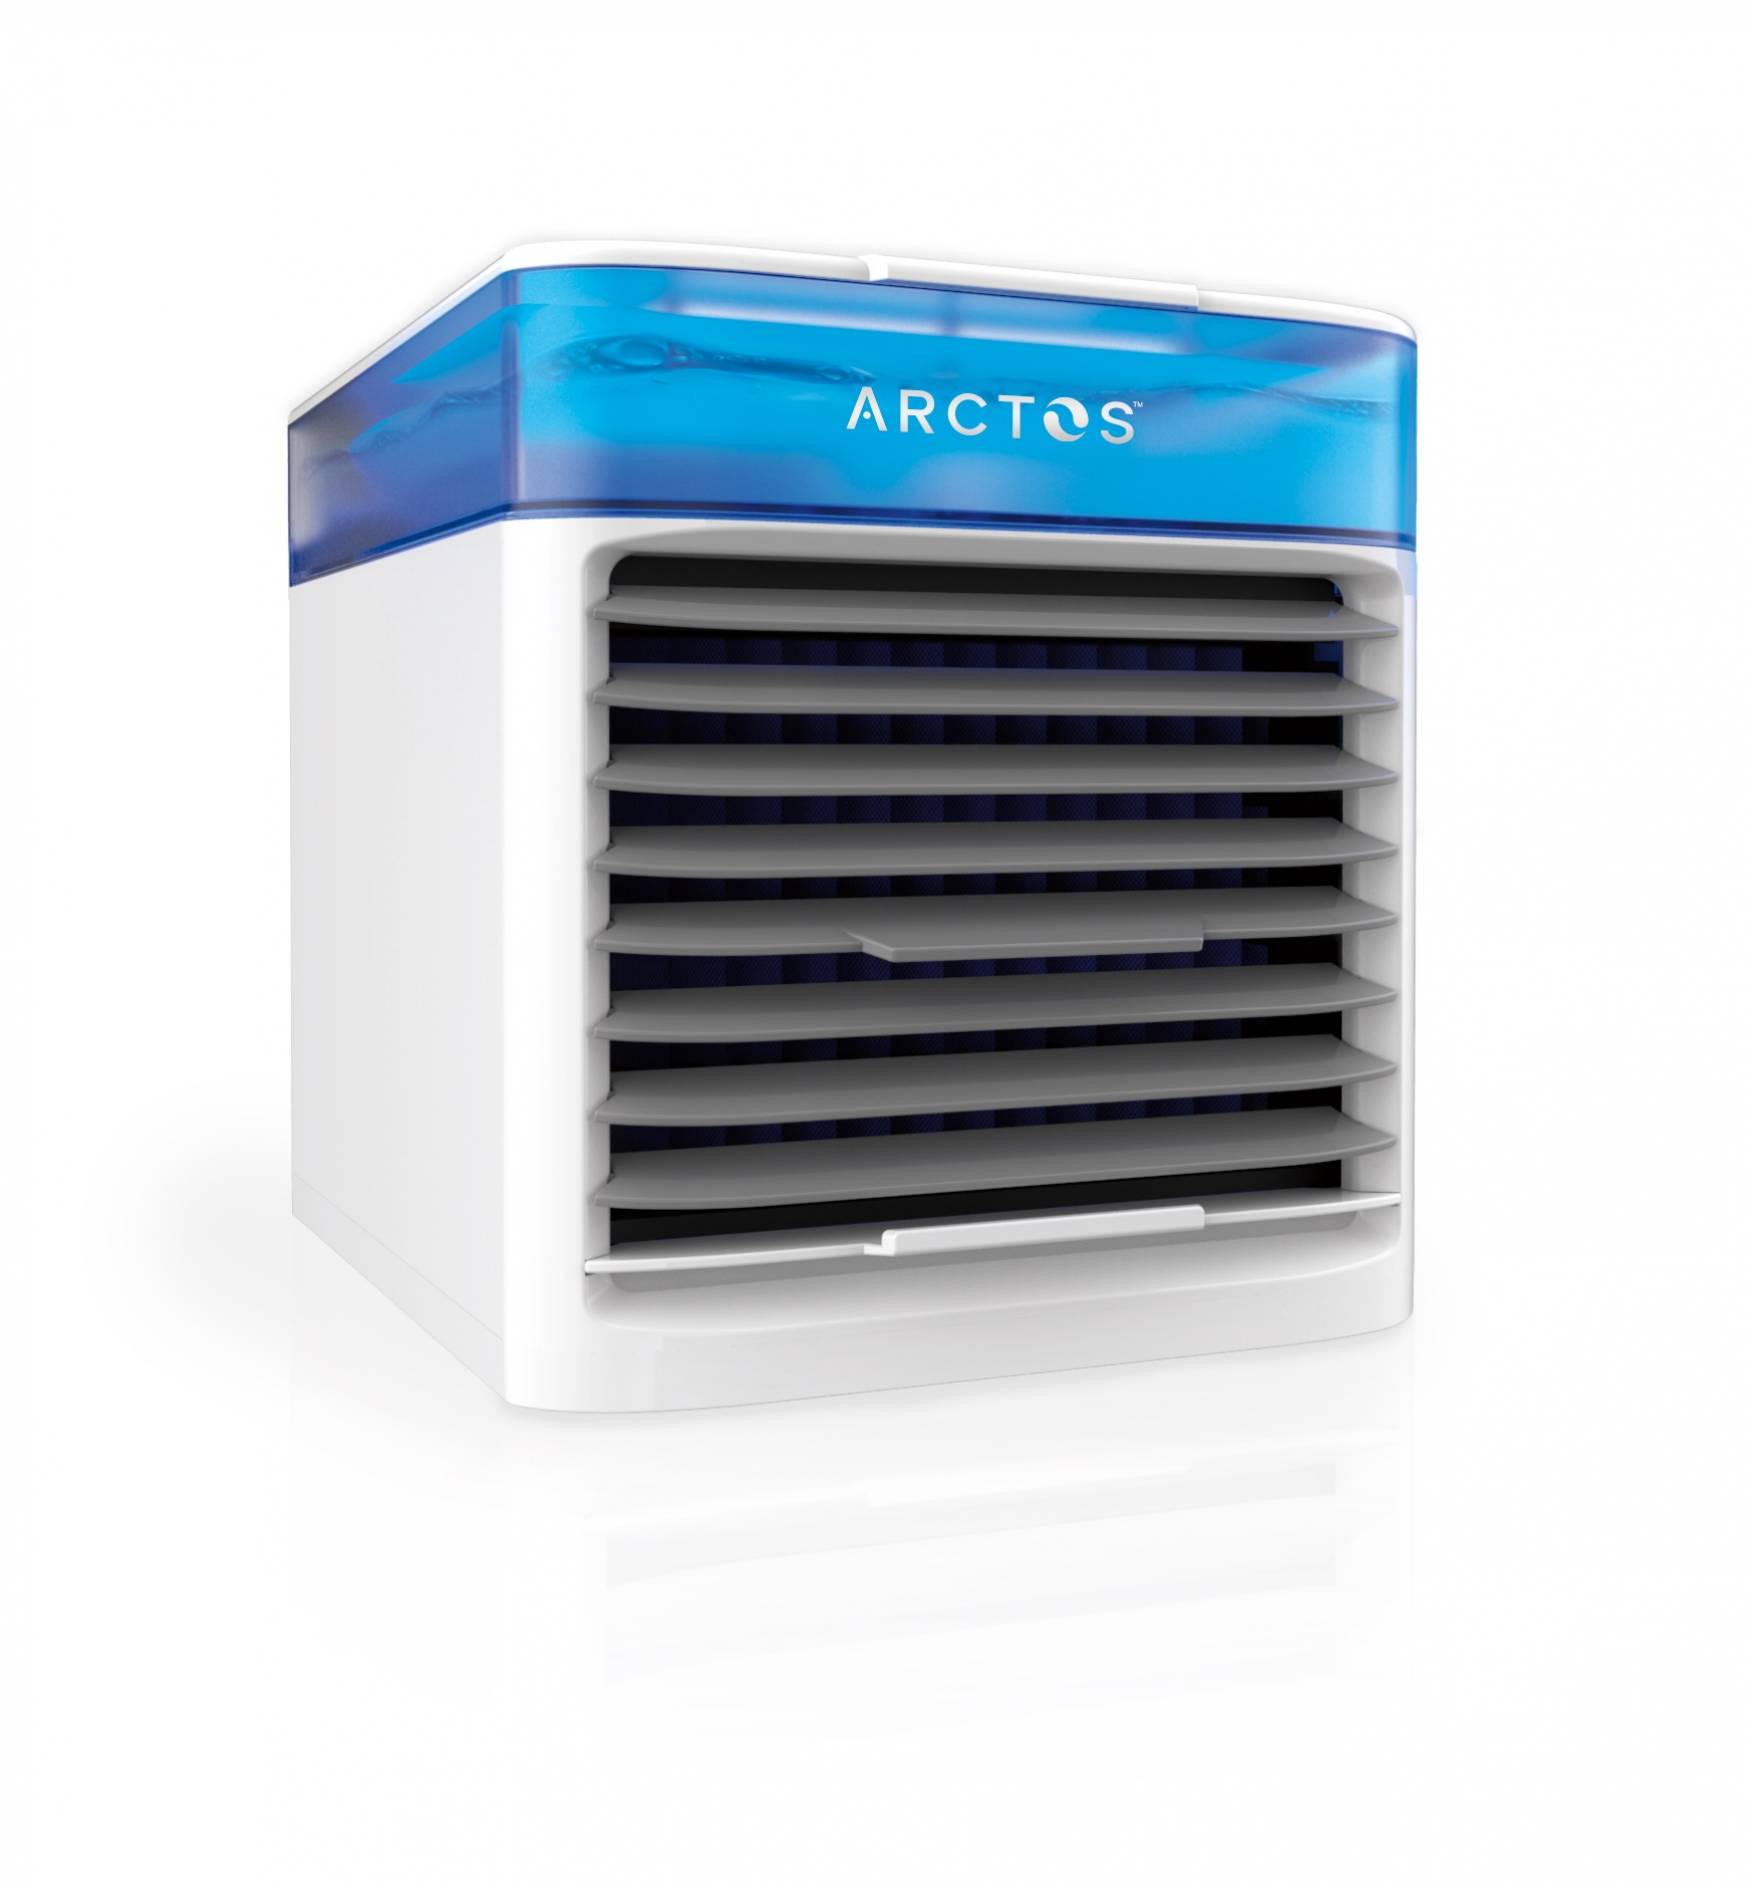 Original Arctos Cooler